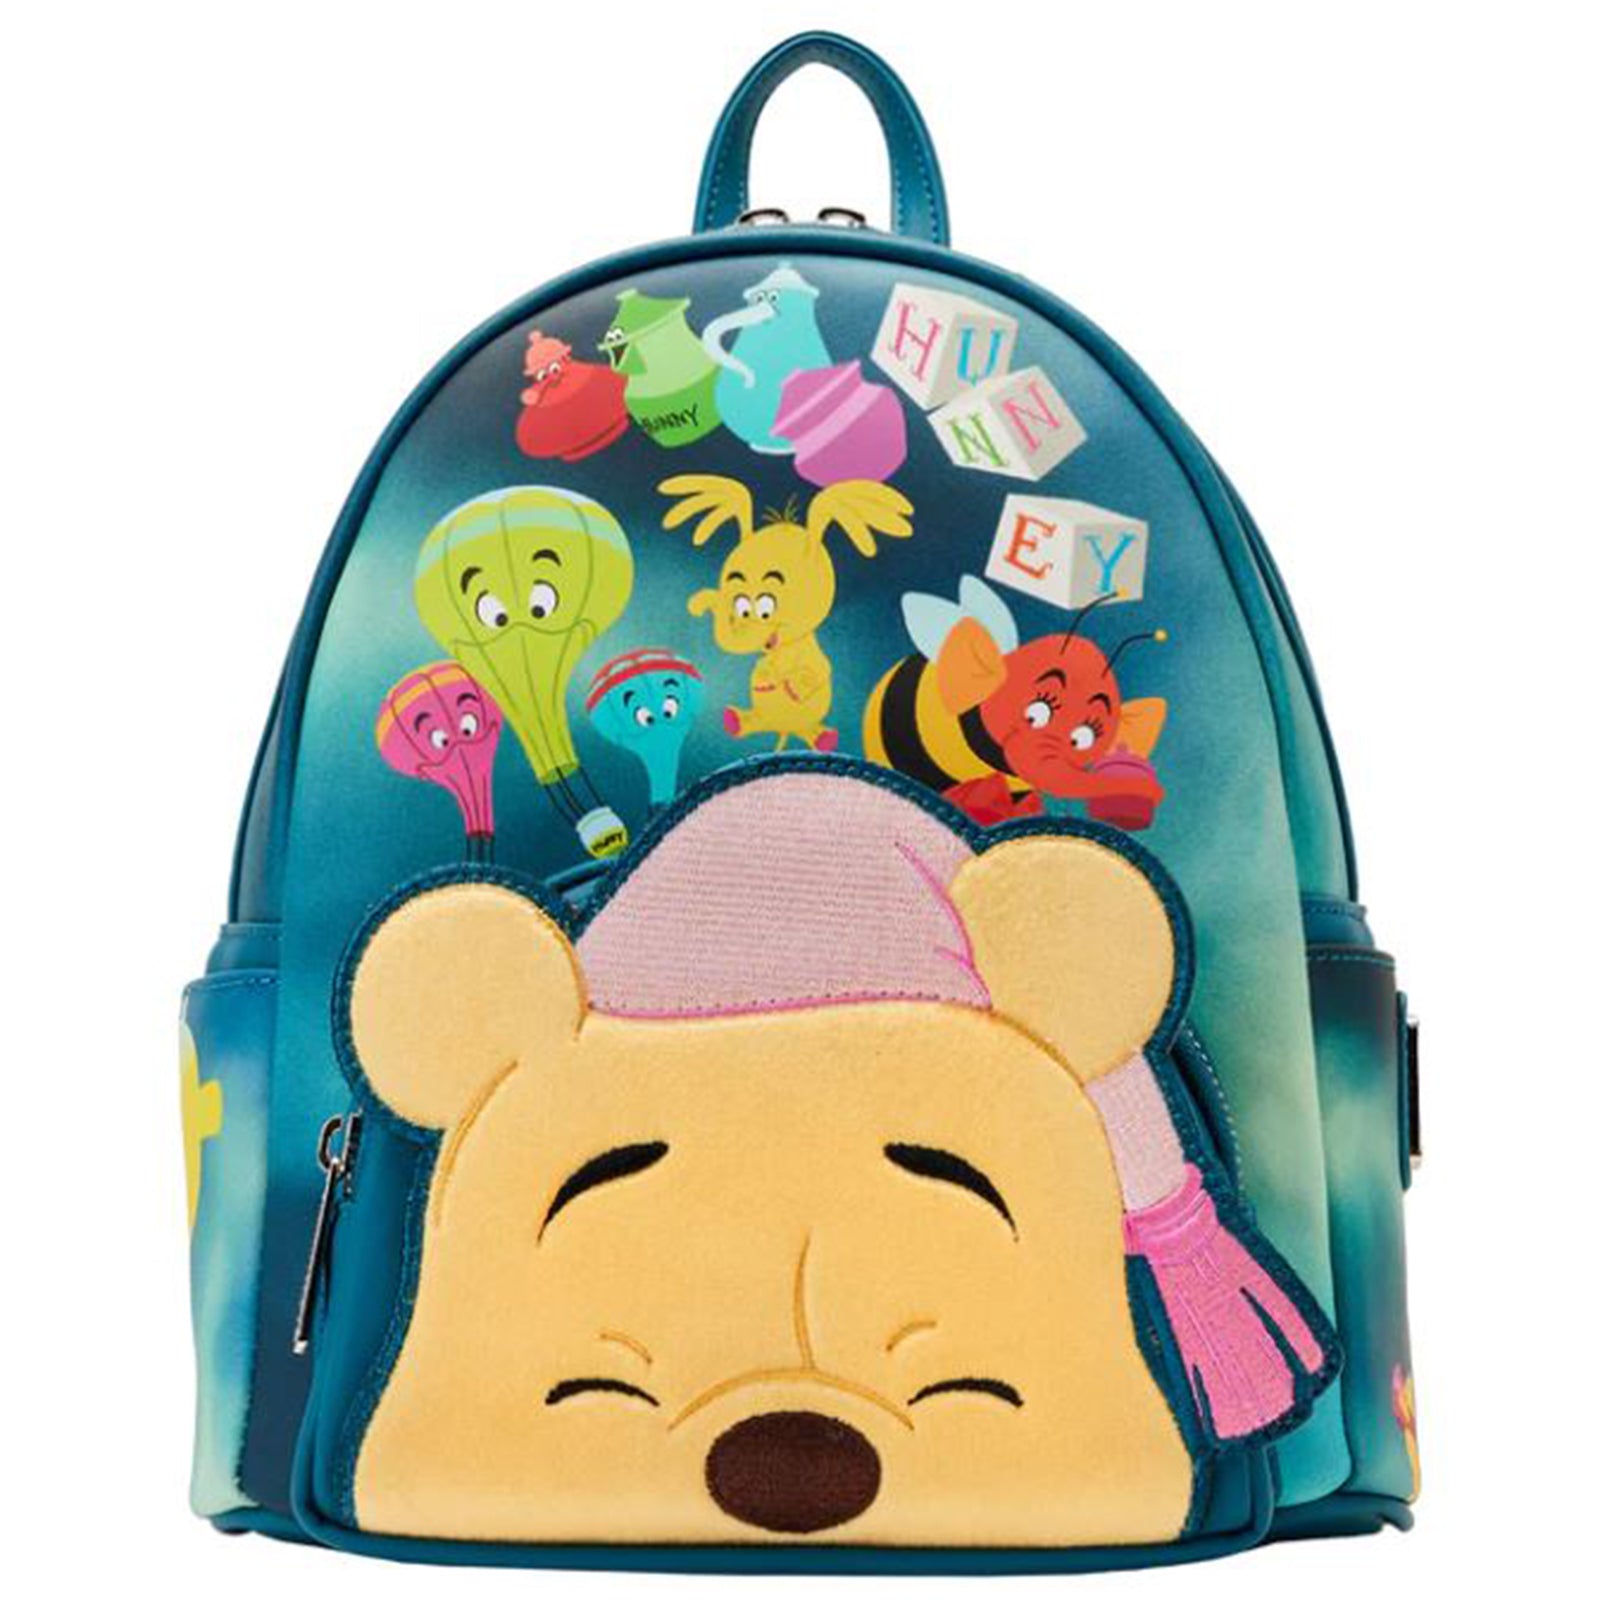 Sleepy Bear Mini Backpack Keychain